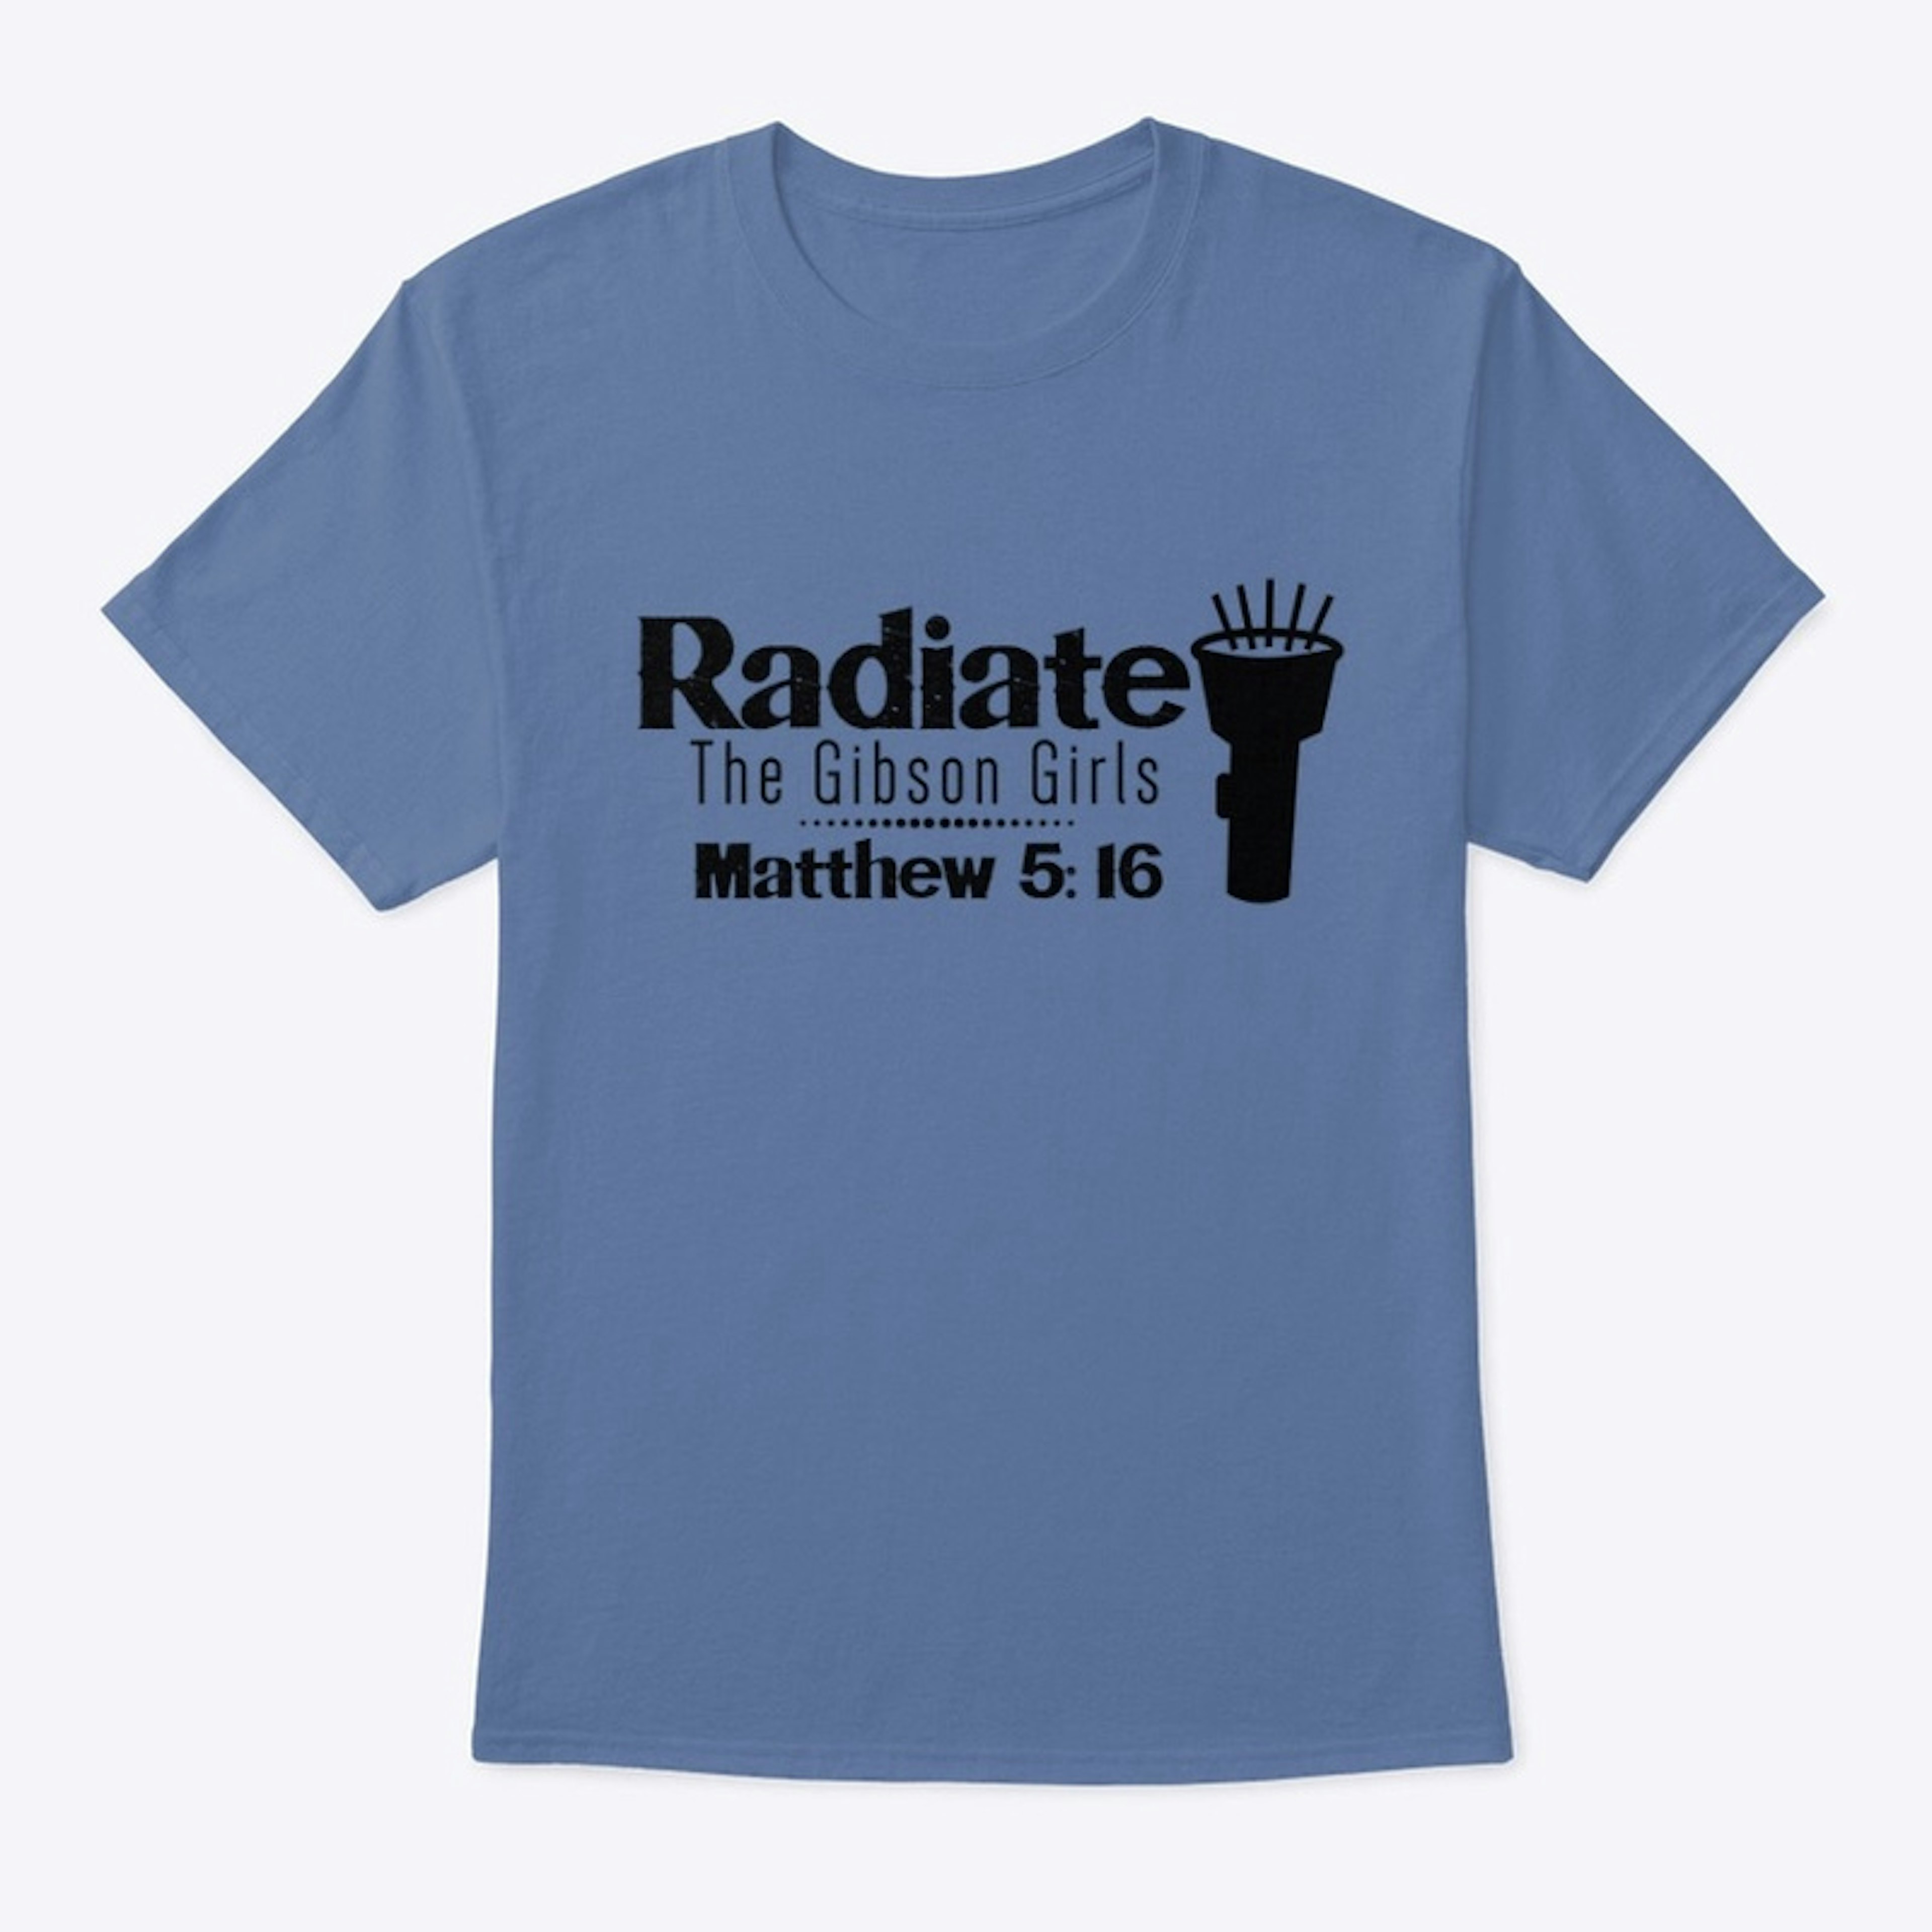 Radiate flashlight 